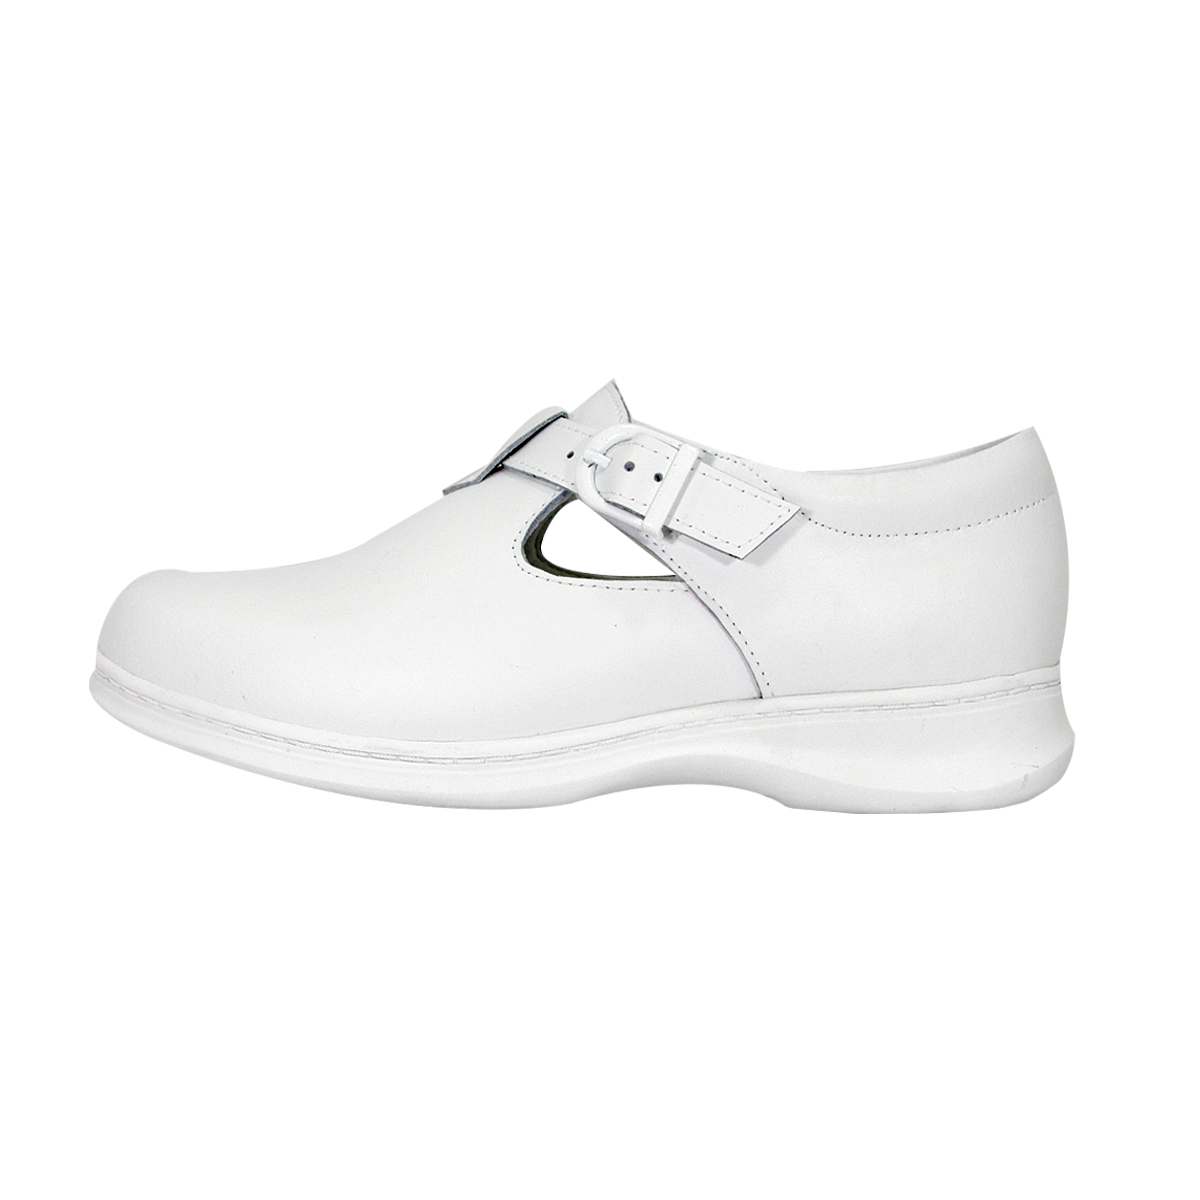 24 HOUR COMFORT Willa Wide Width Professional Sleek Shoe WHITE 12 - image 3 of 7